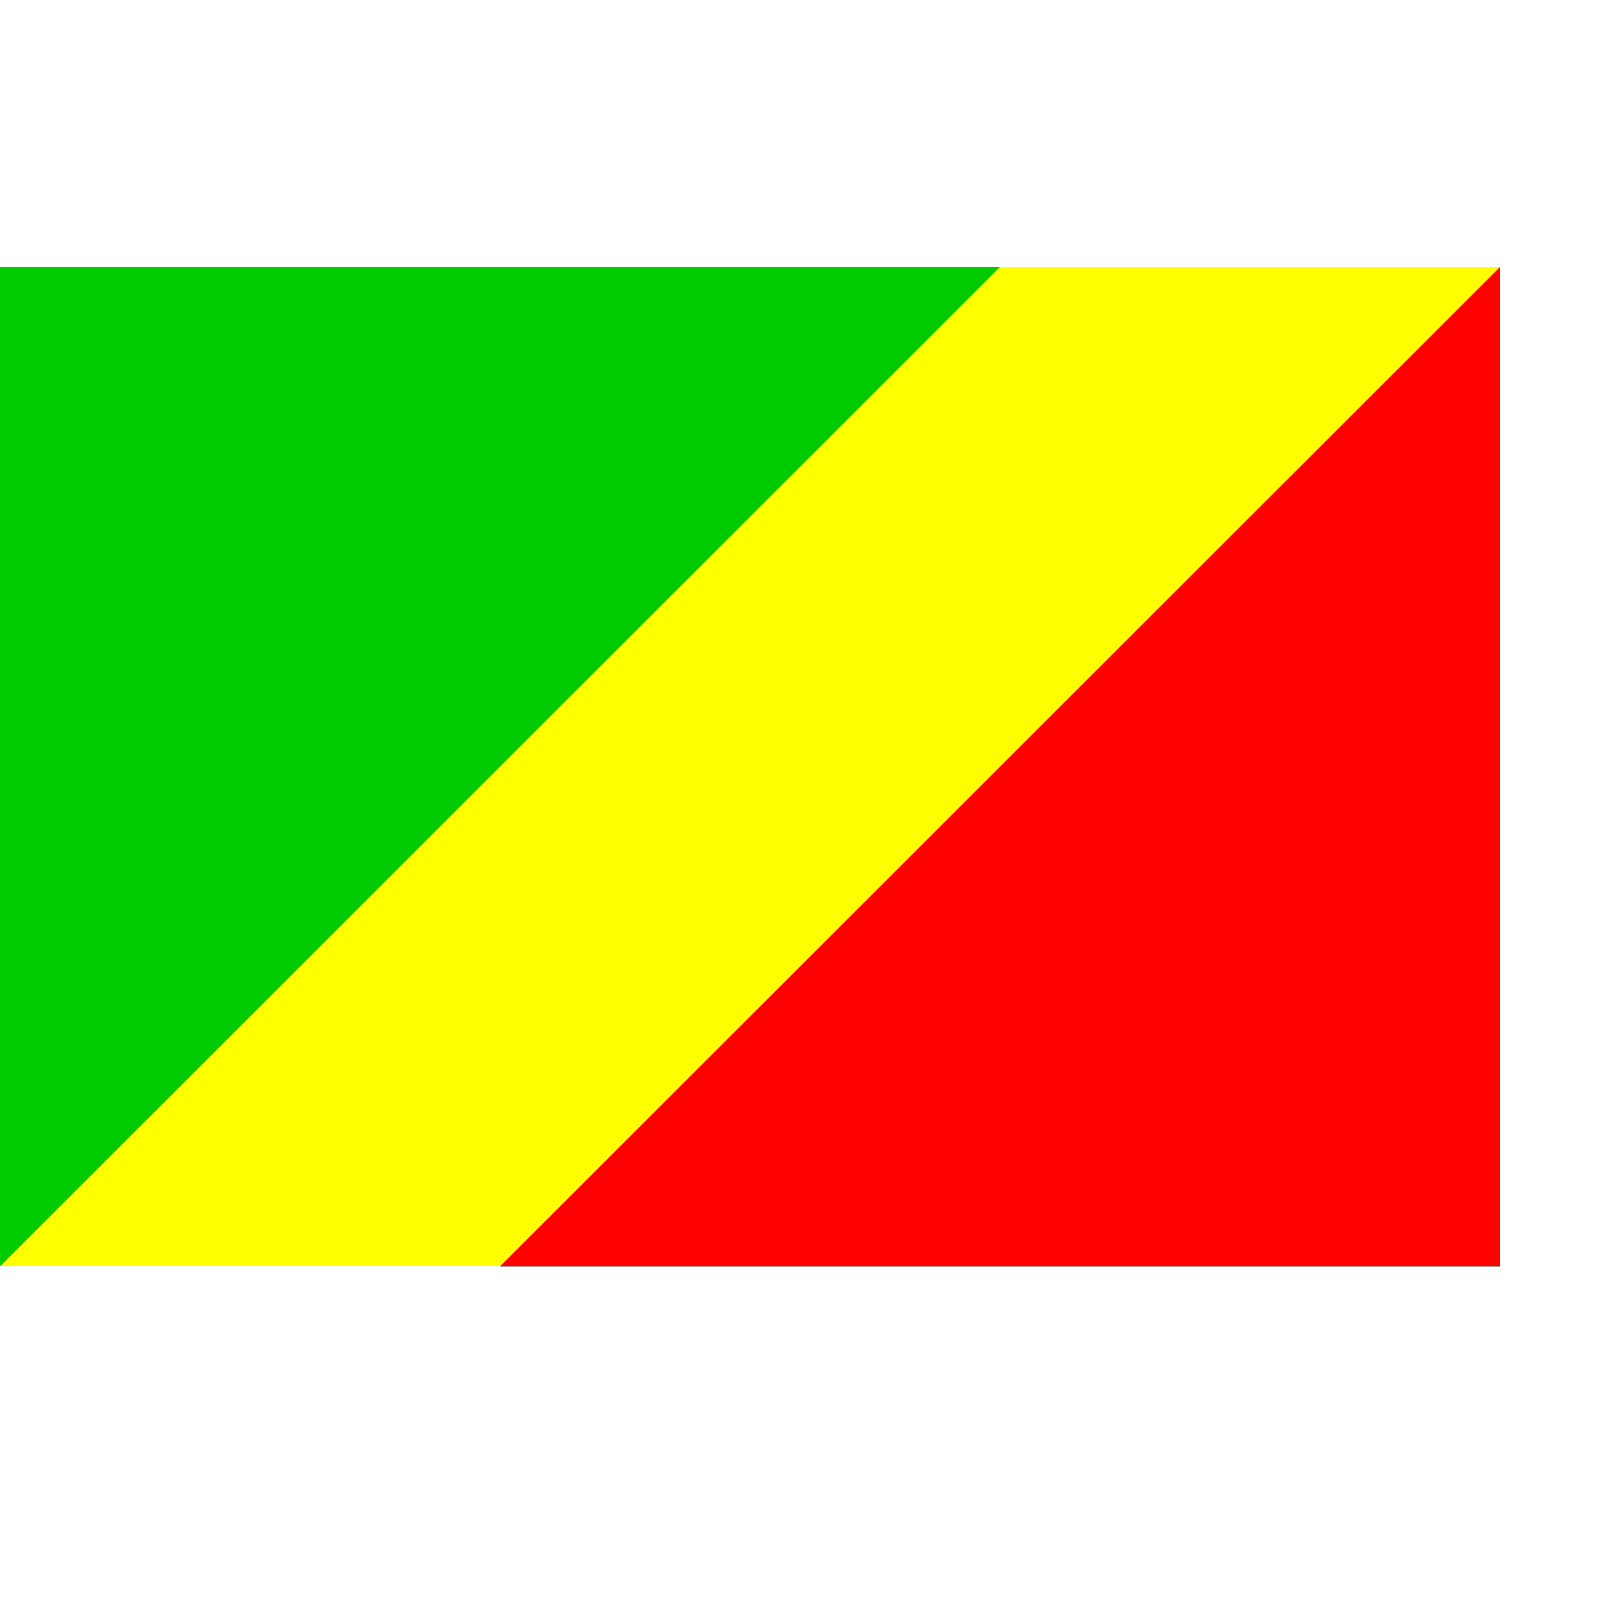 Congo Republic Flag